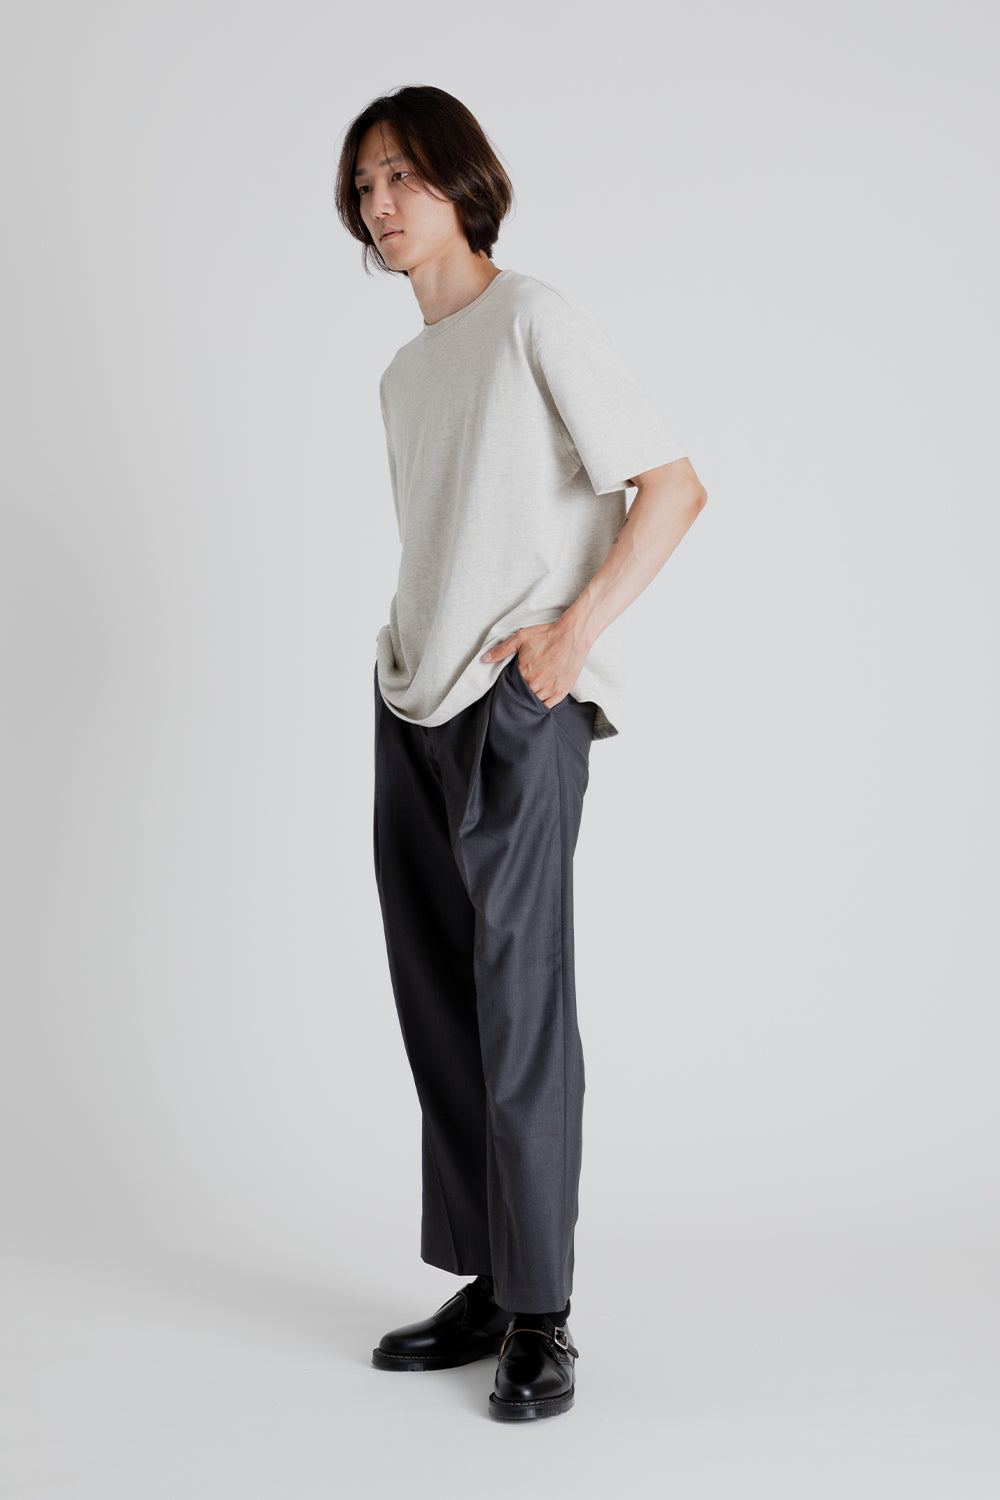 Frizmworks OG One Tuck Wide Slack Pants in Charcoal | Wallace Mercanti